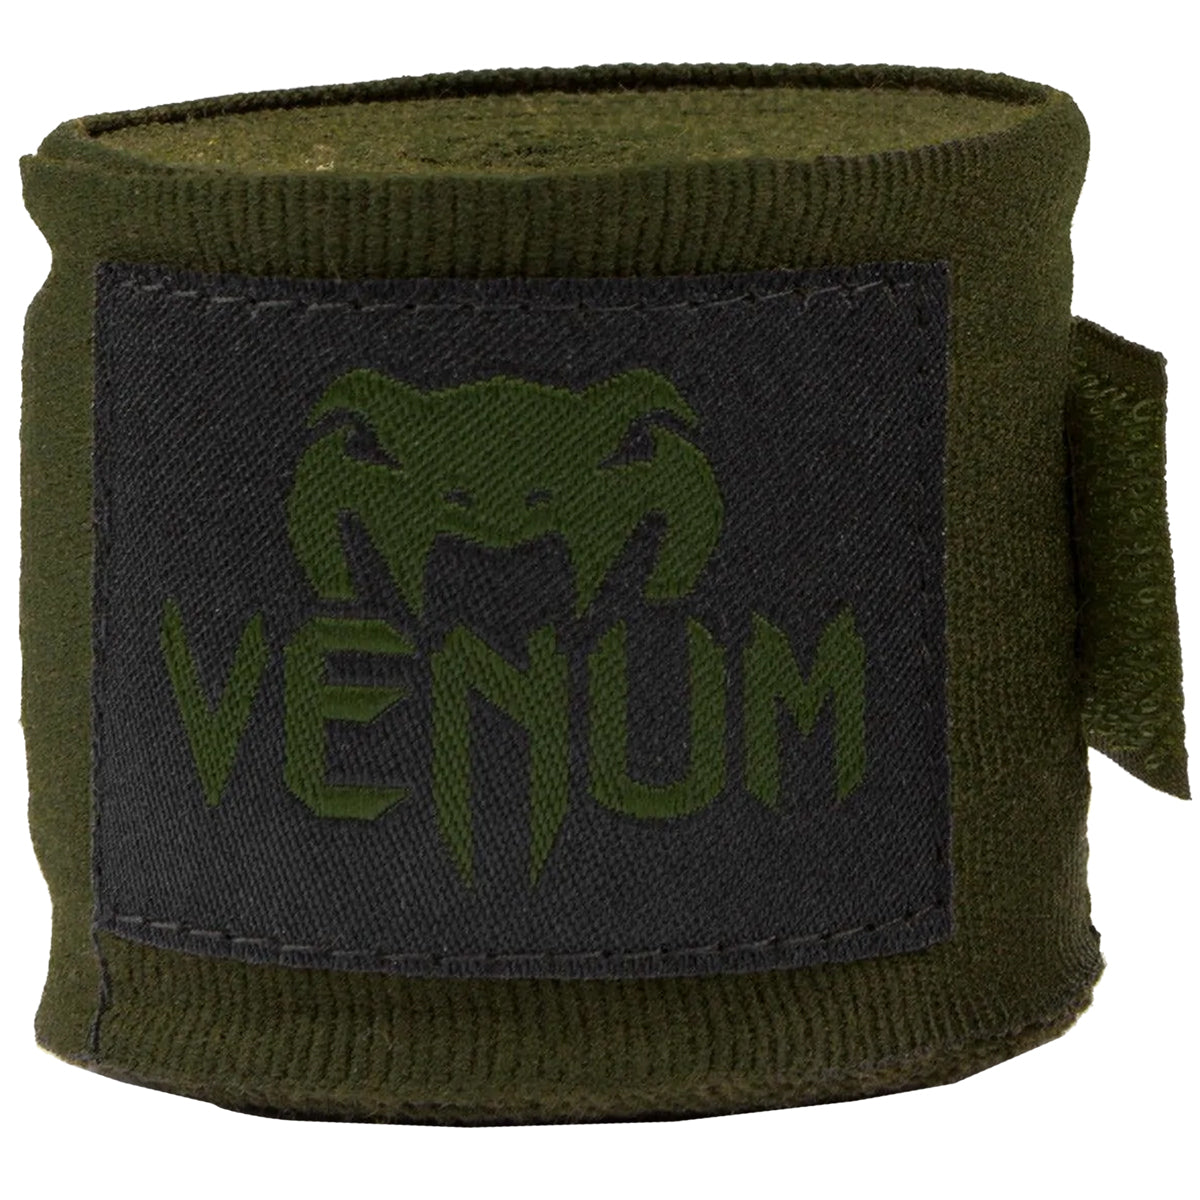 Venum Kontact 2.5m Boxing Handwraps - Khaki/Black Venum